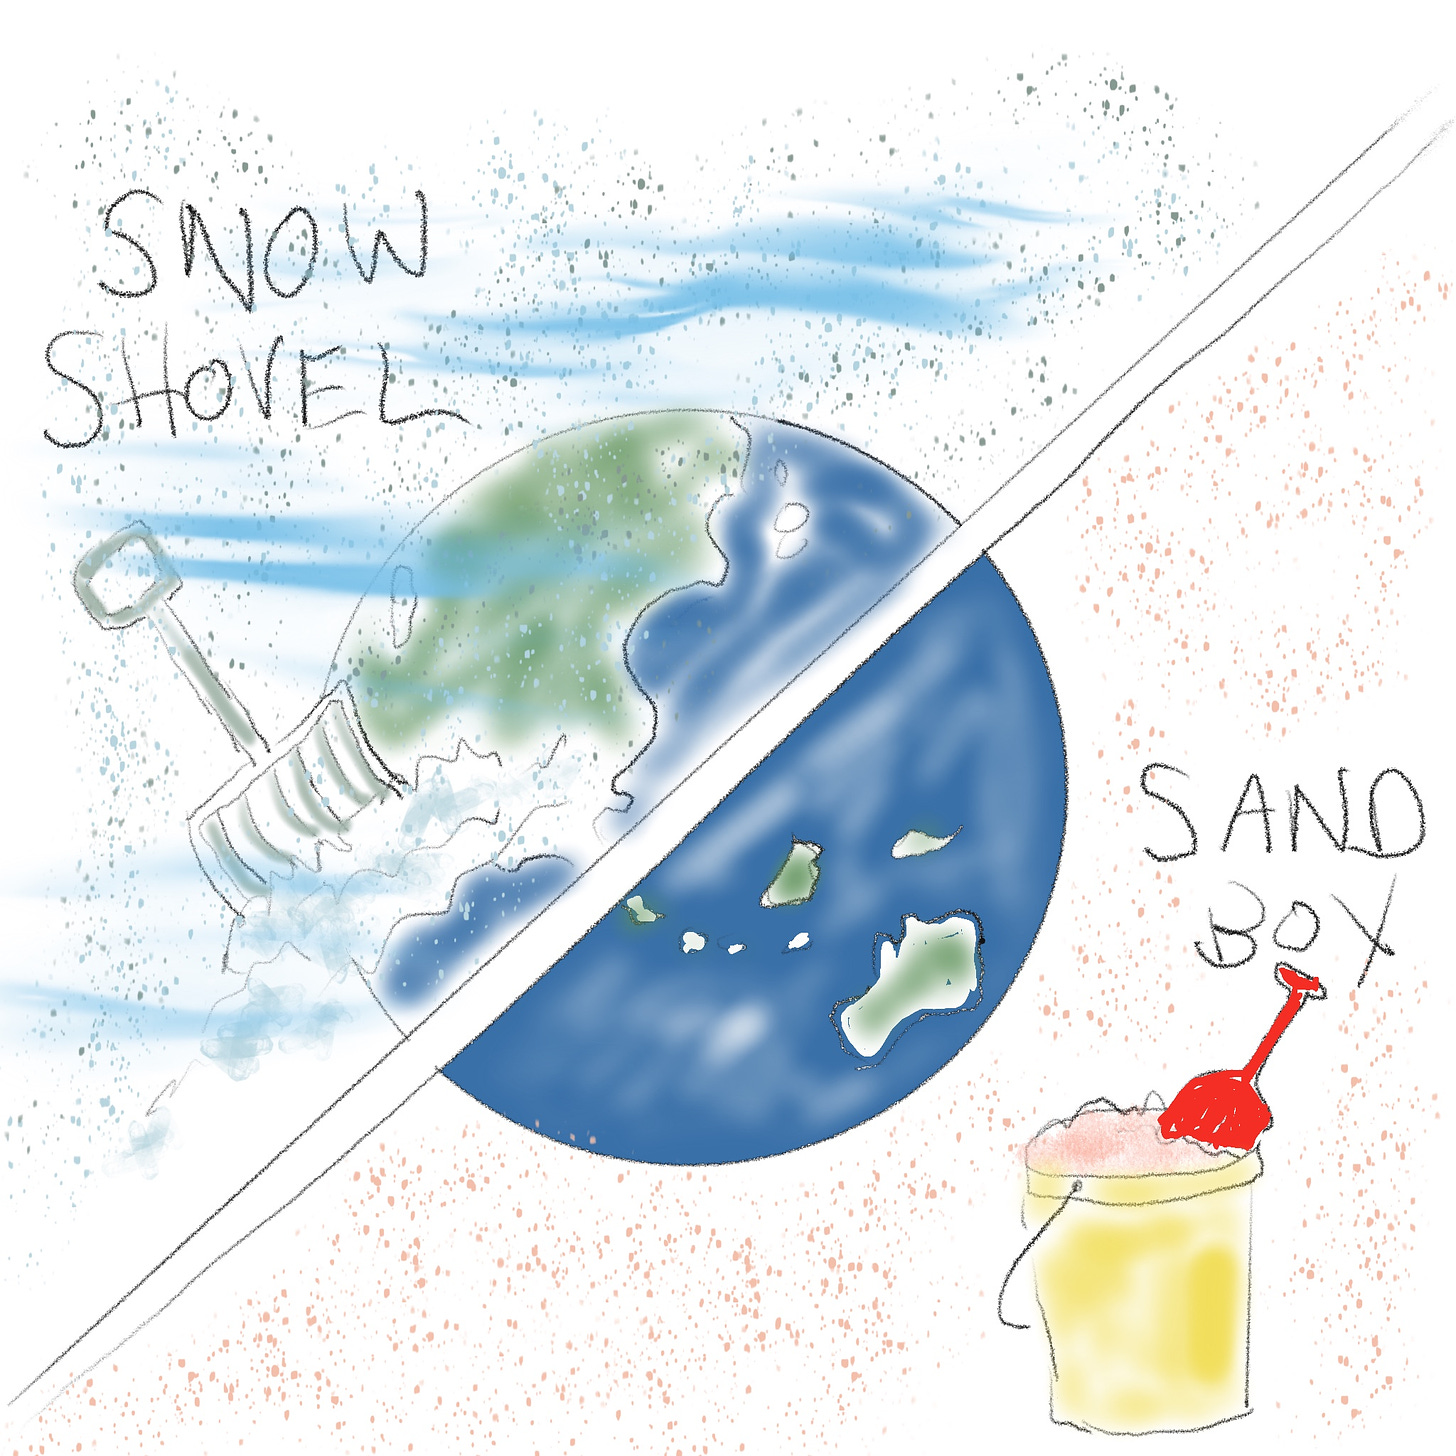 snow shovel vs. sandbox